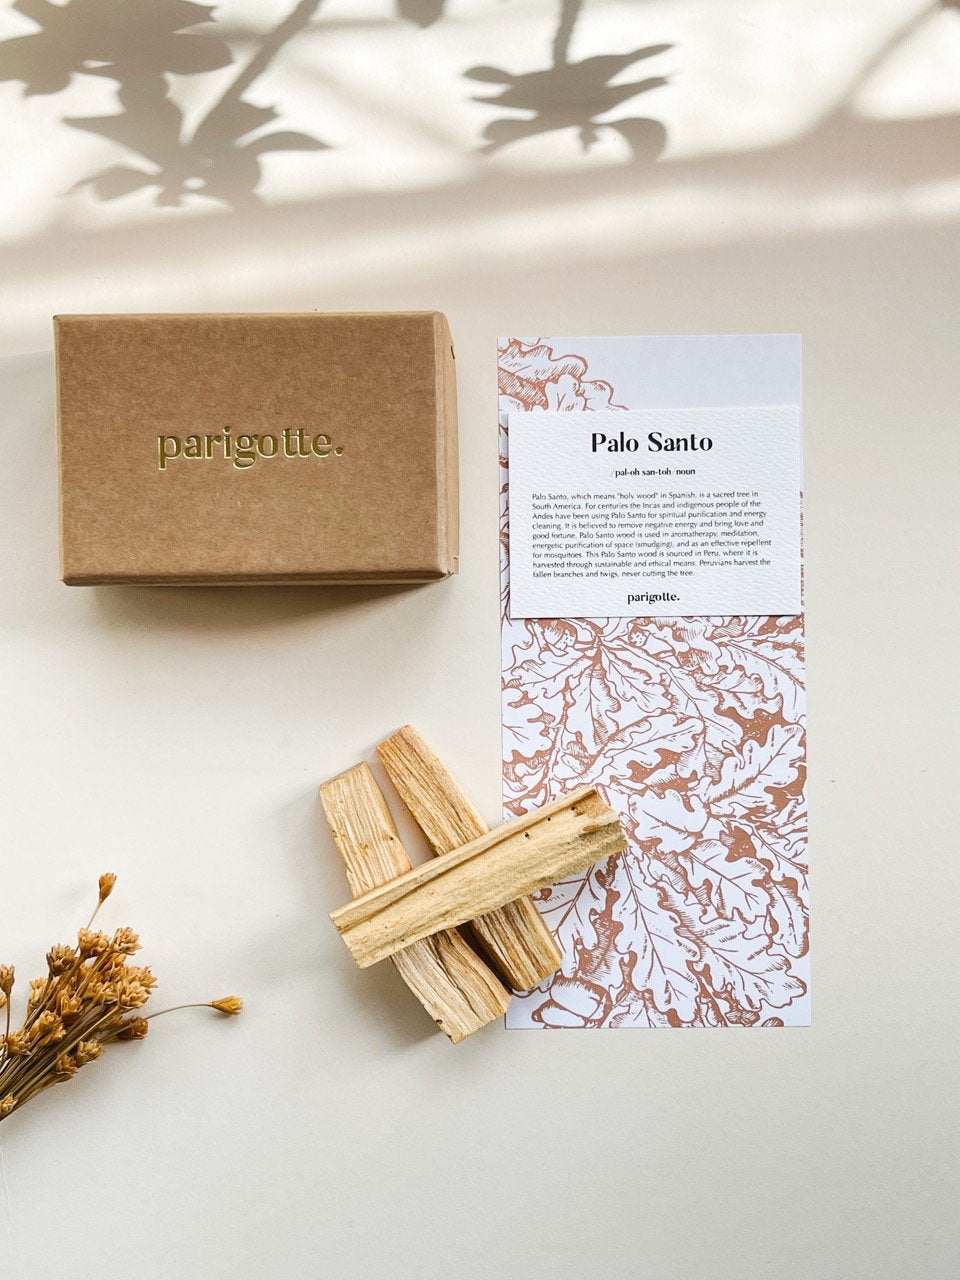 Parigotte Palo Santo - Box of 7 Sticks